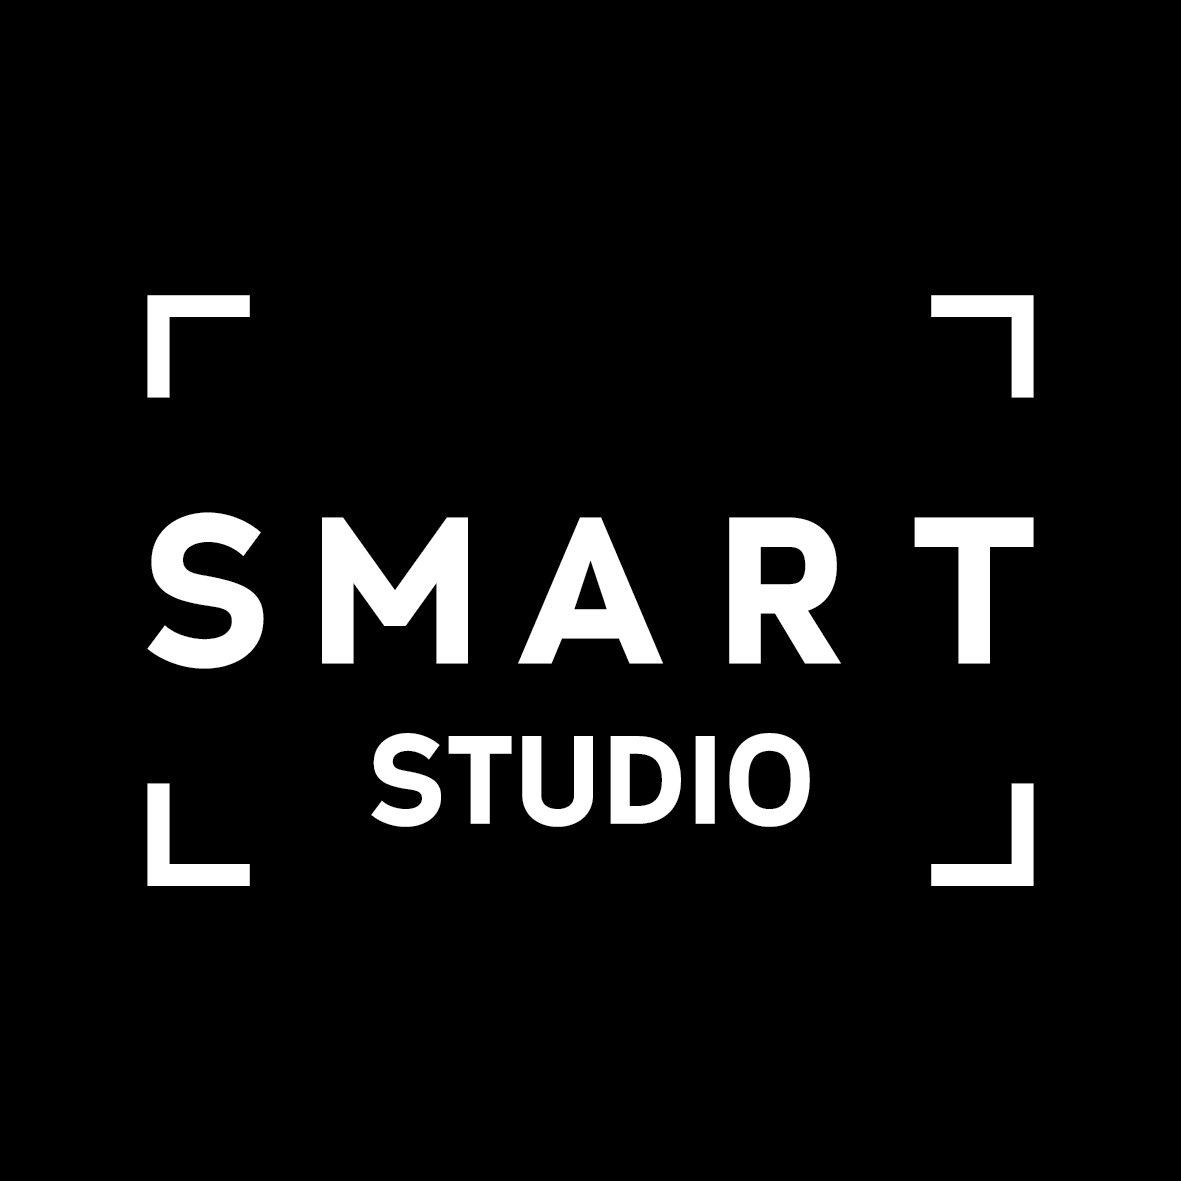  ..,   SMART studio